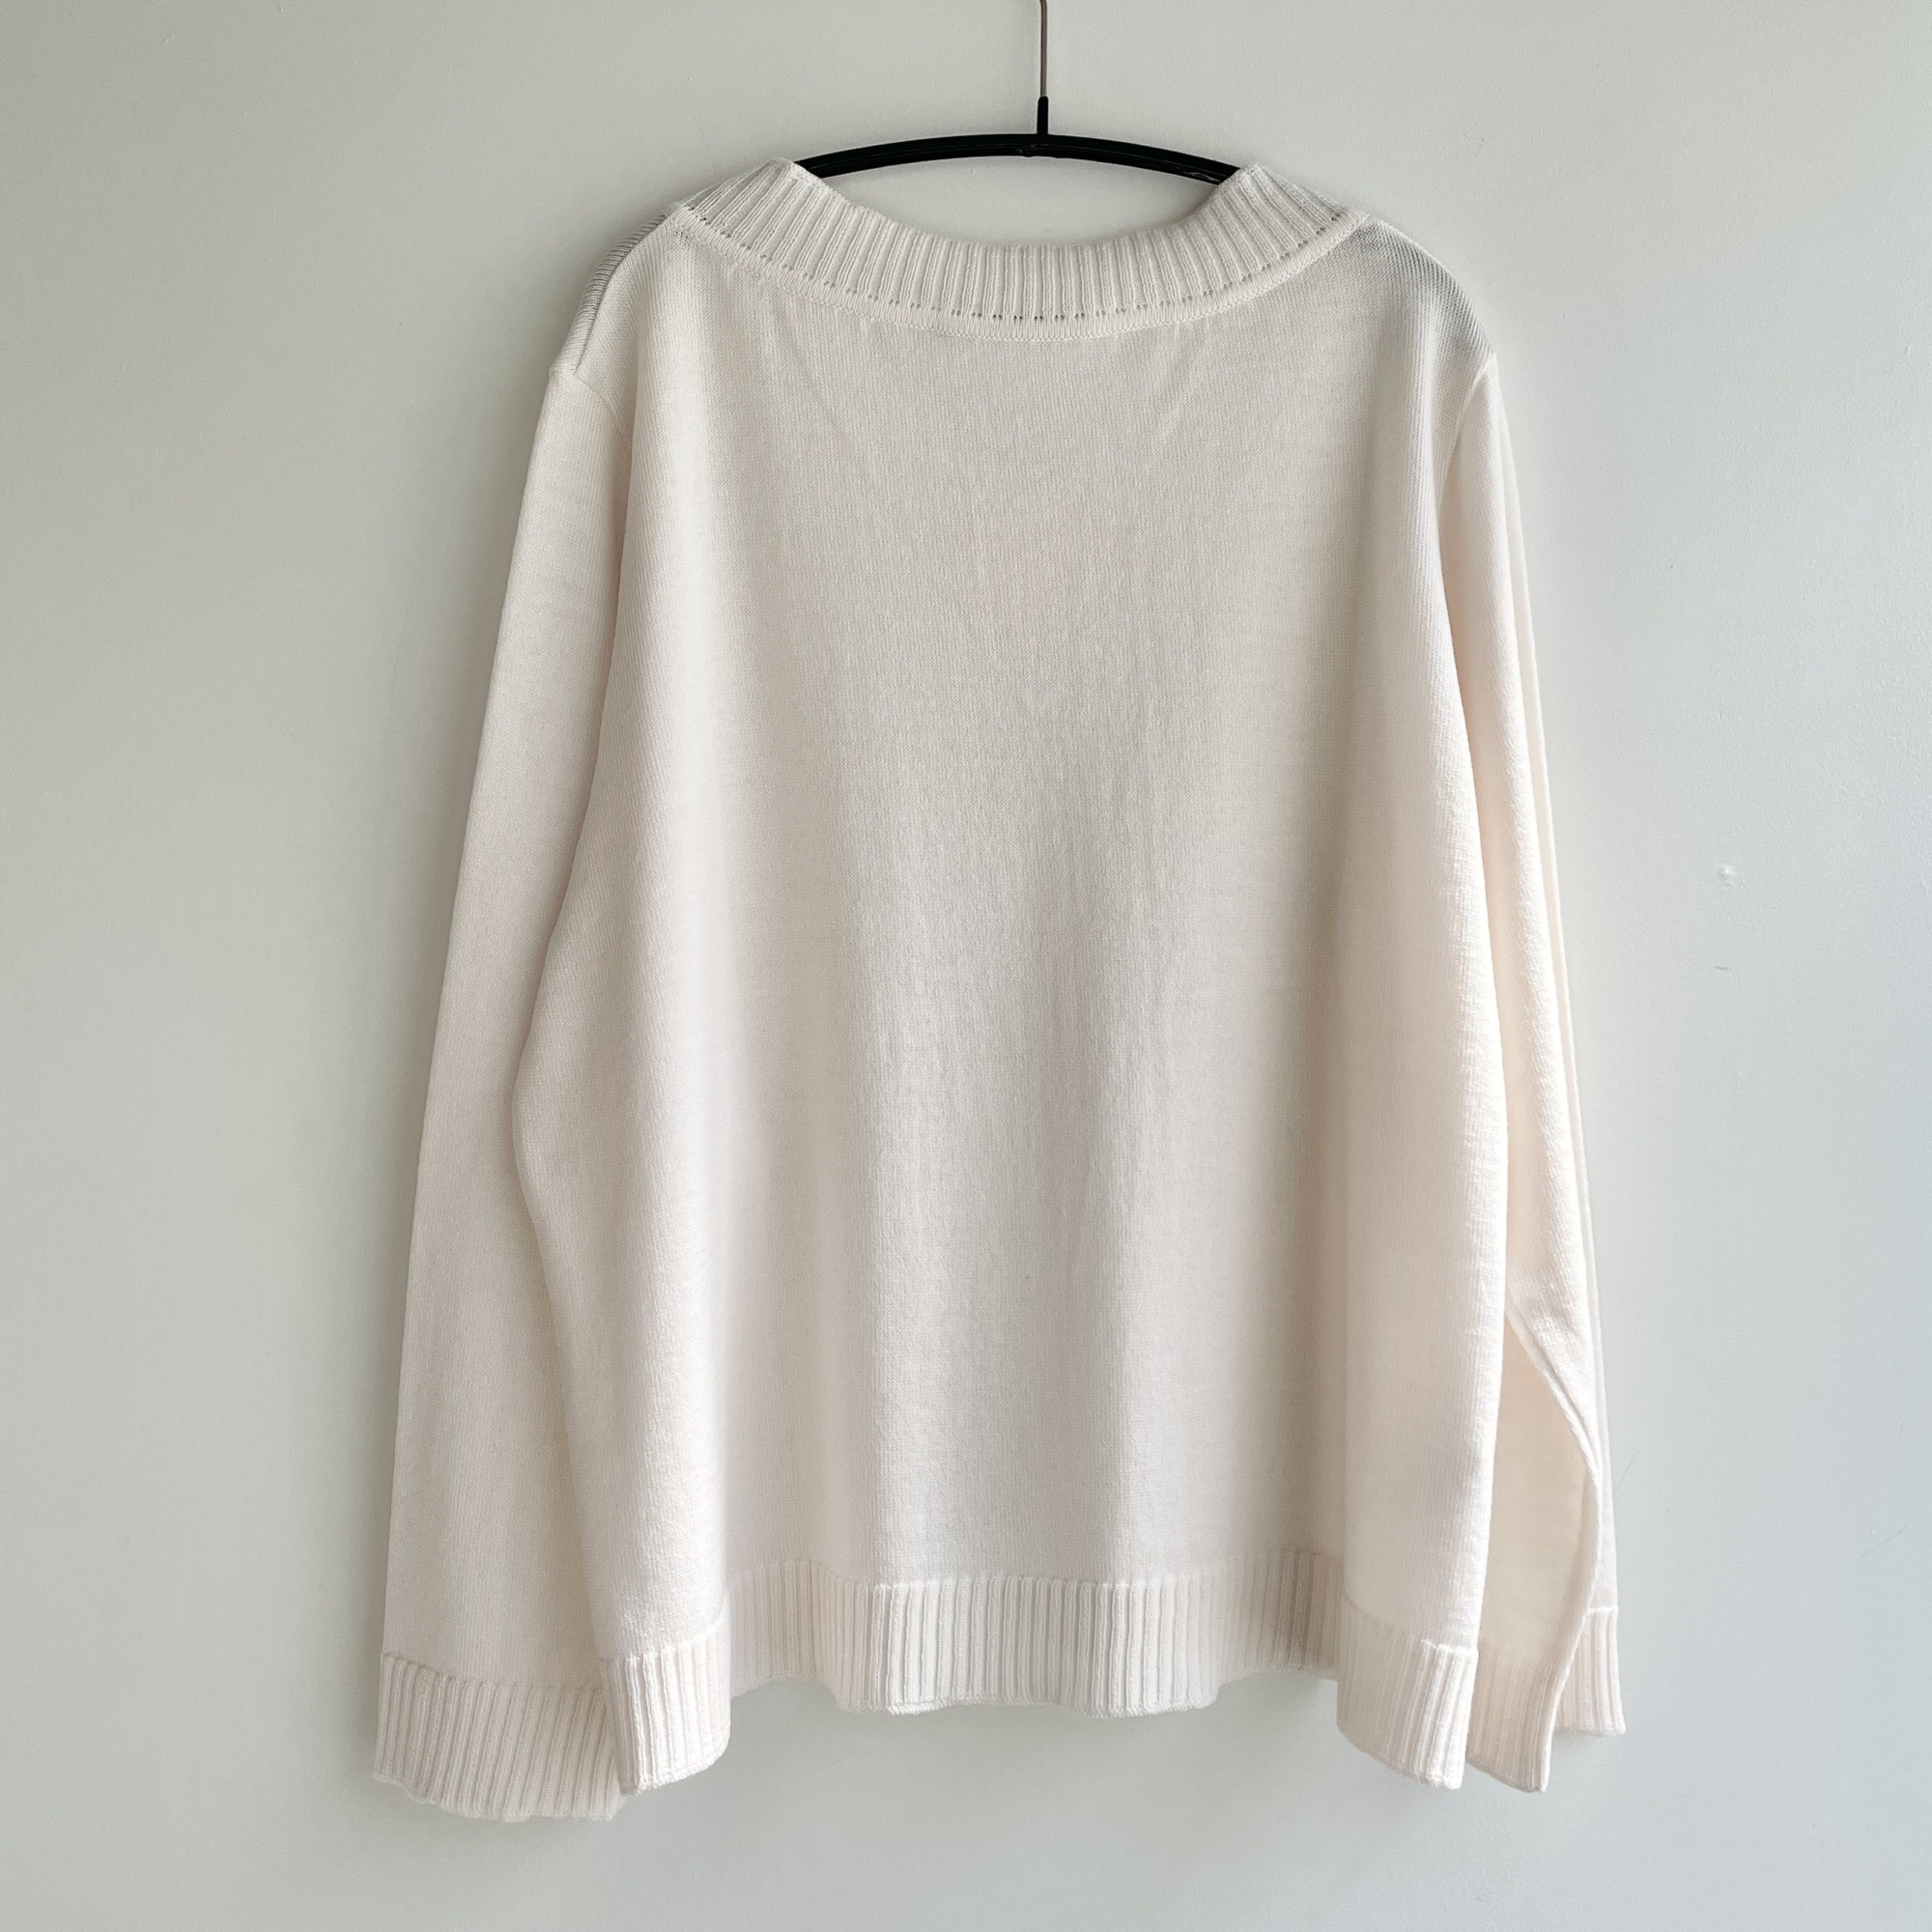 QUATTROPIUOthers SERENA / Sweater